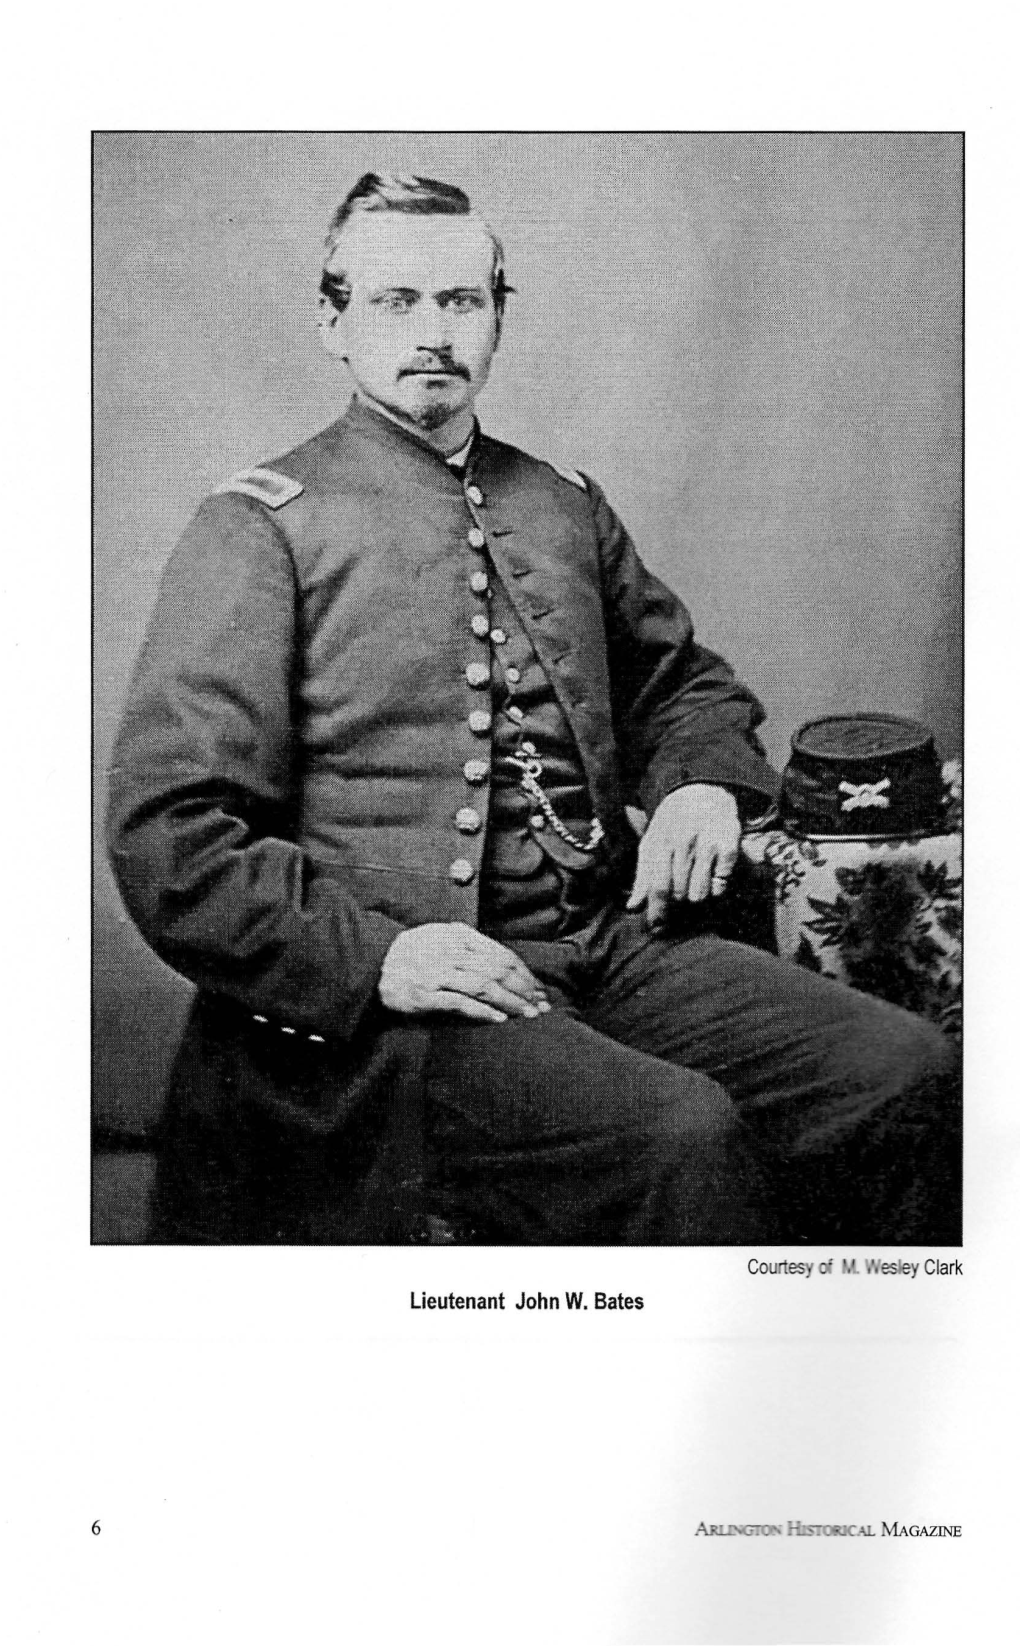 Lieutenant John W. Bates